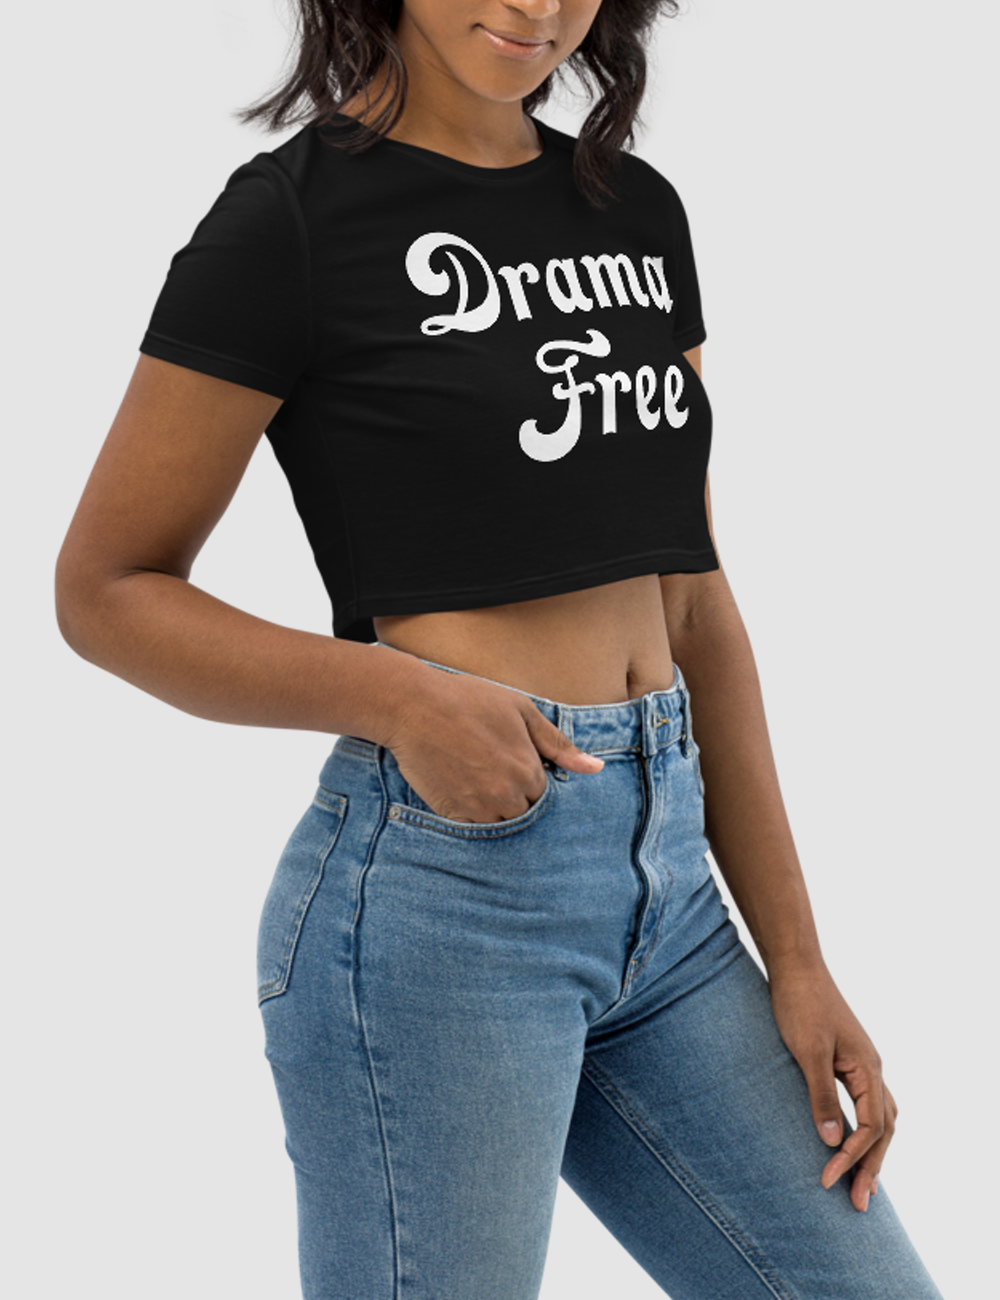 Drama Free | Women's Crop Top T-Shirt OniTakai